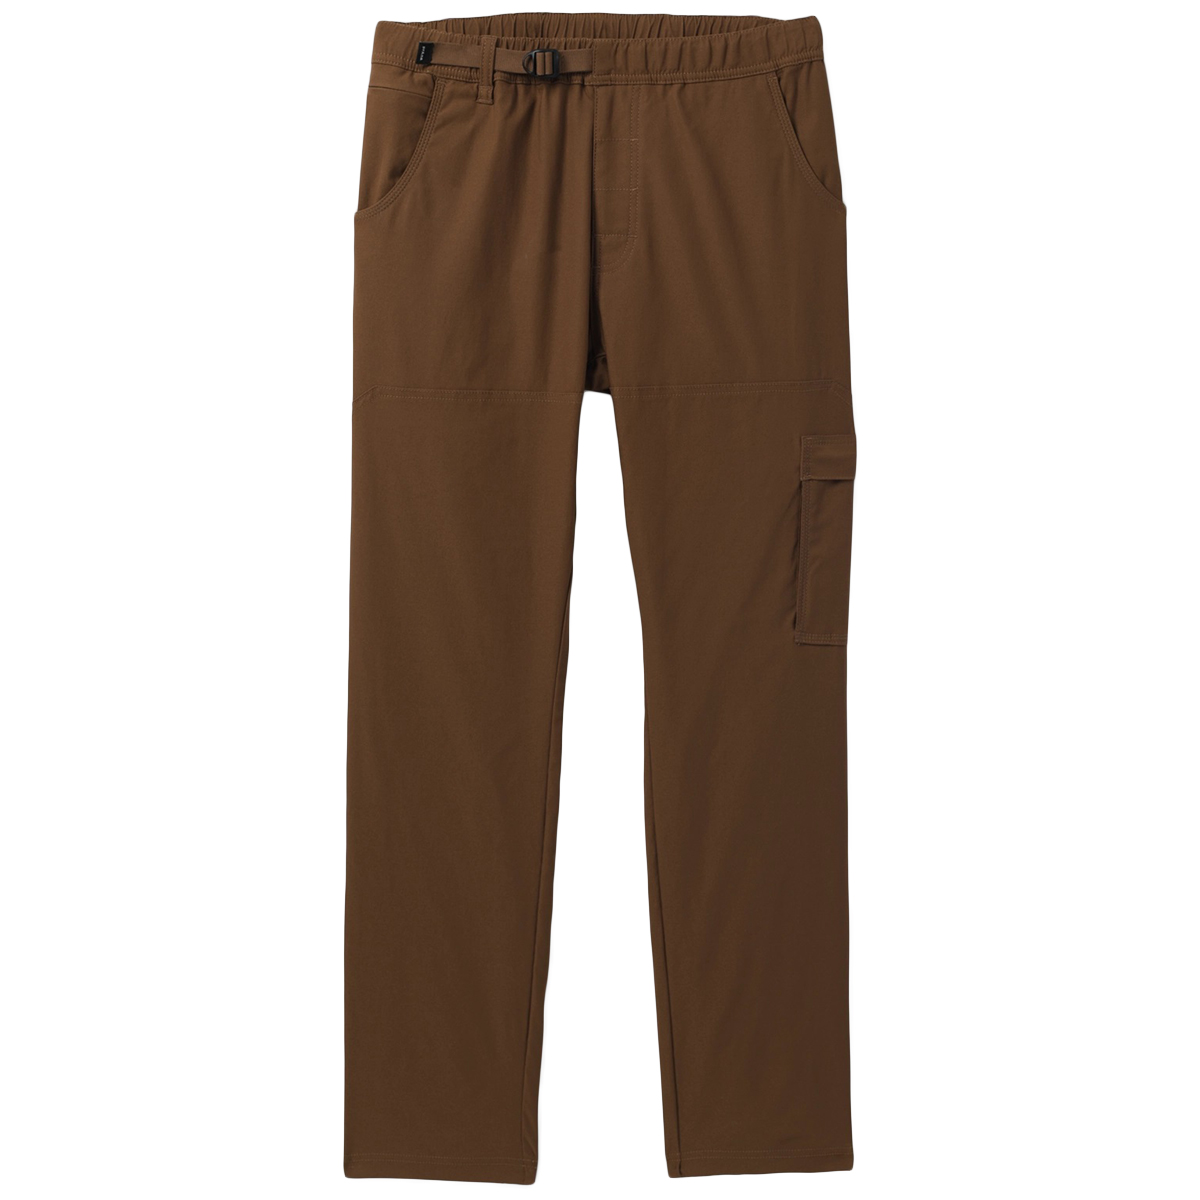 Prana Men's Stretch Zion E-Waist Pants Ii - Size XL